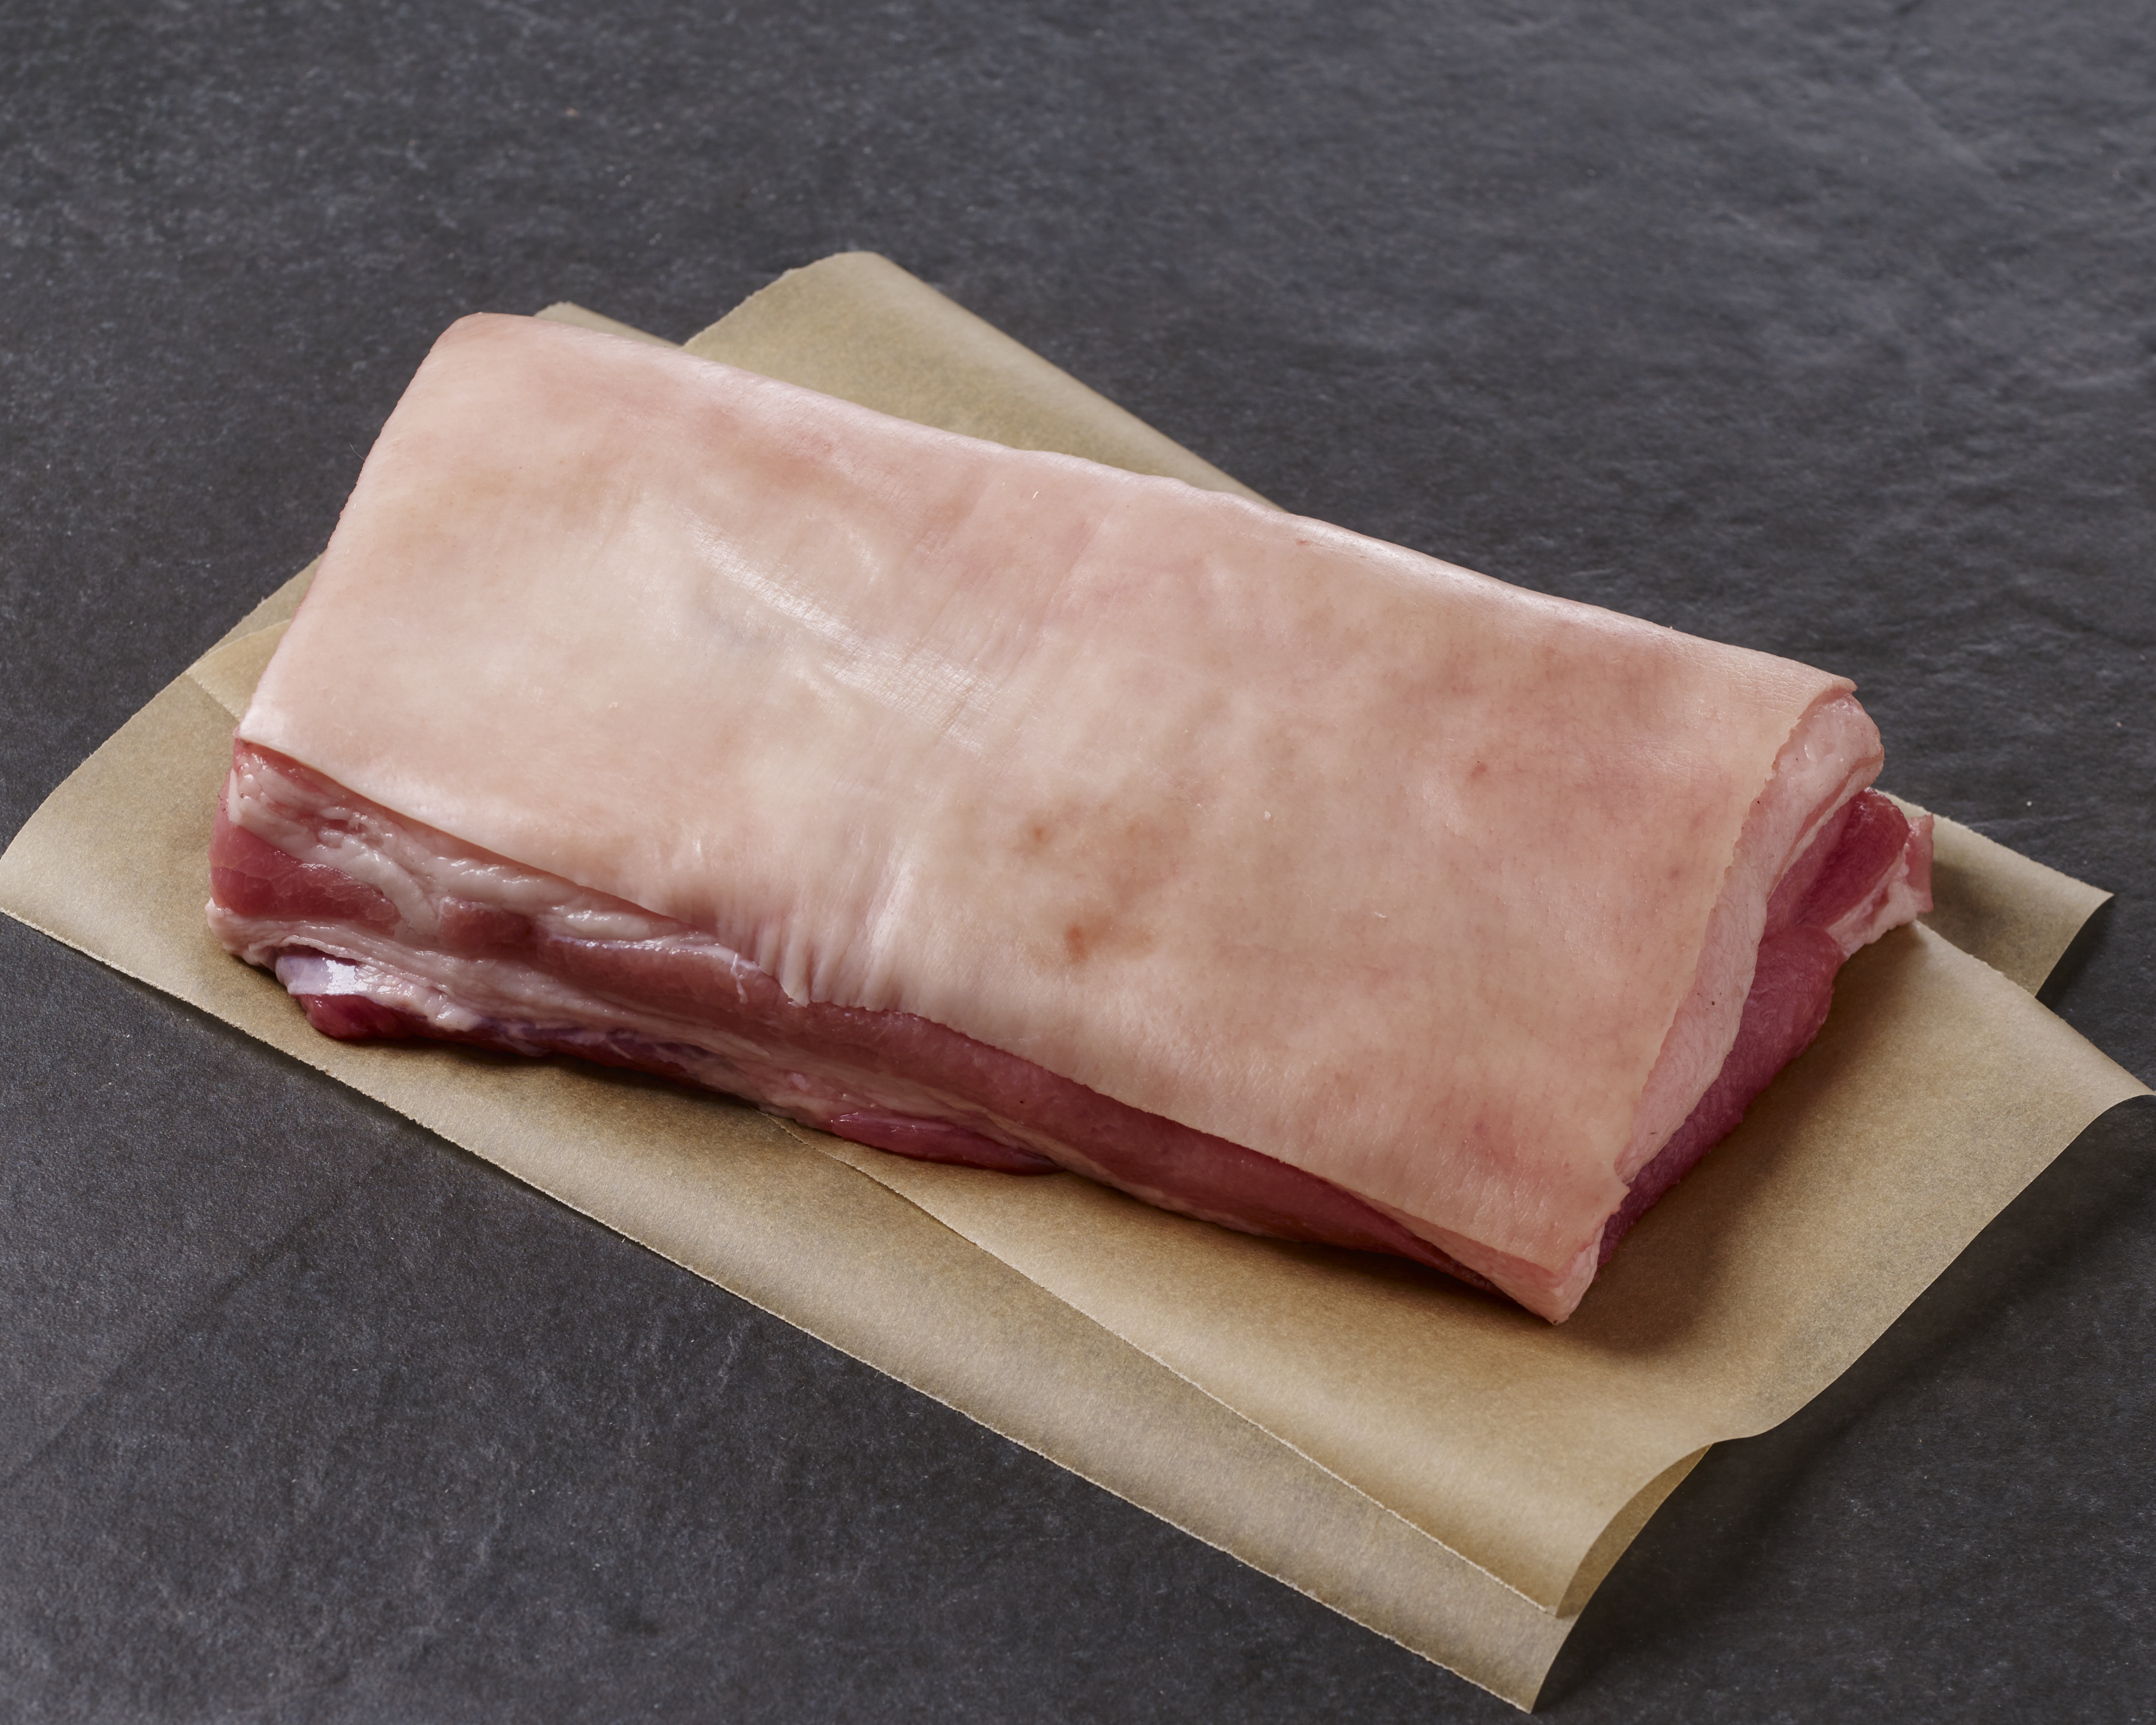 Berkshire Pork Belly